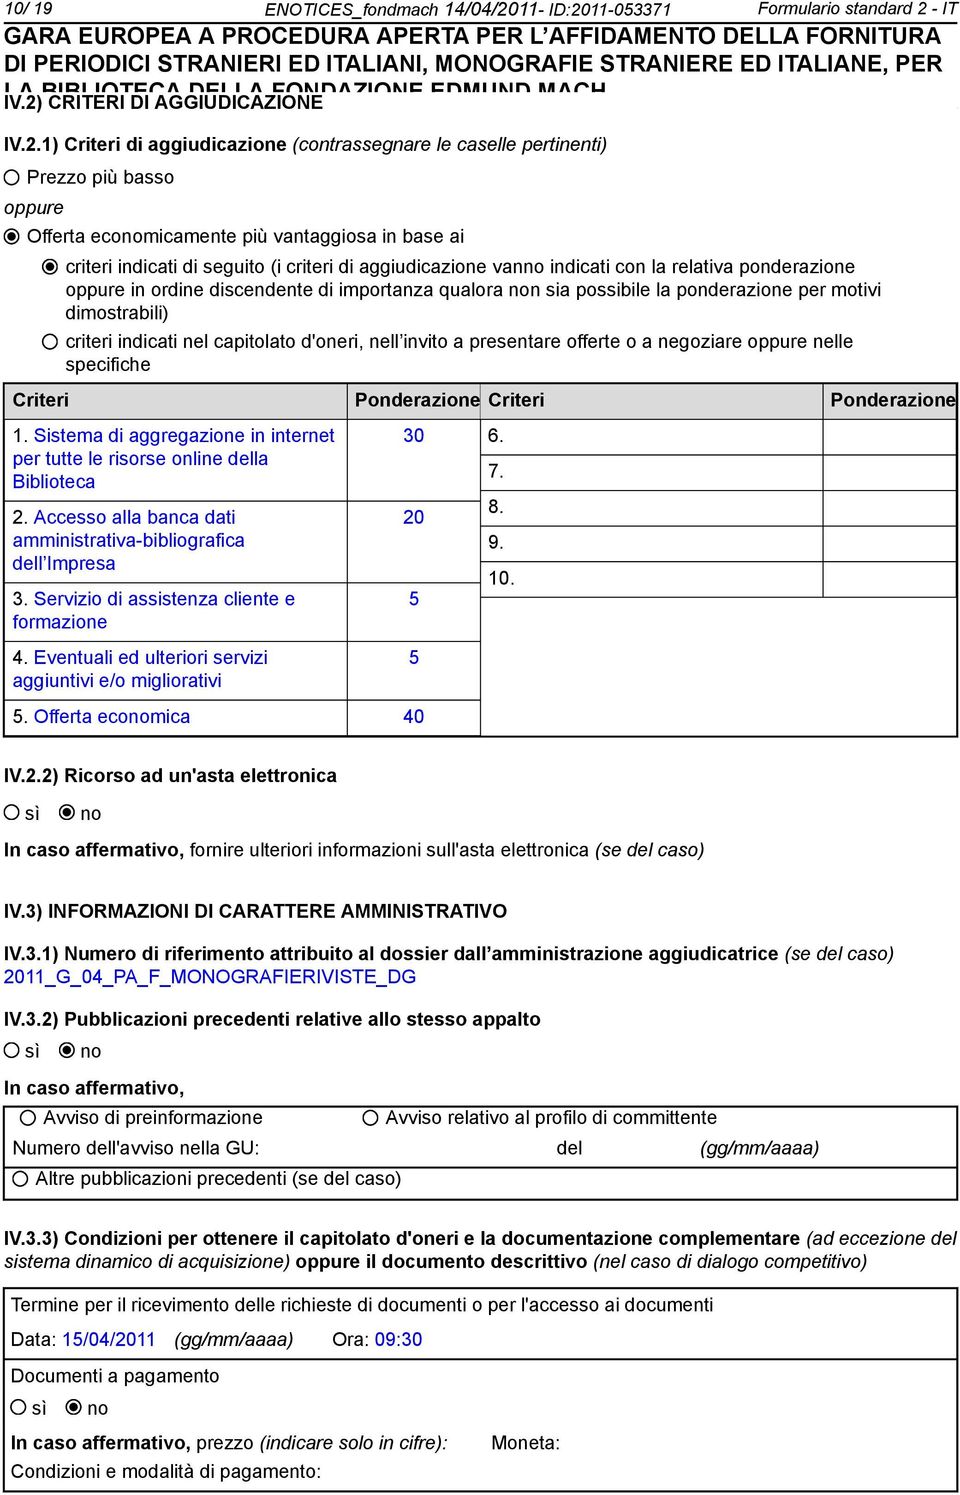 11-053371 Formulario standard 2 